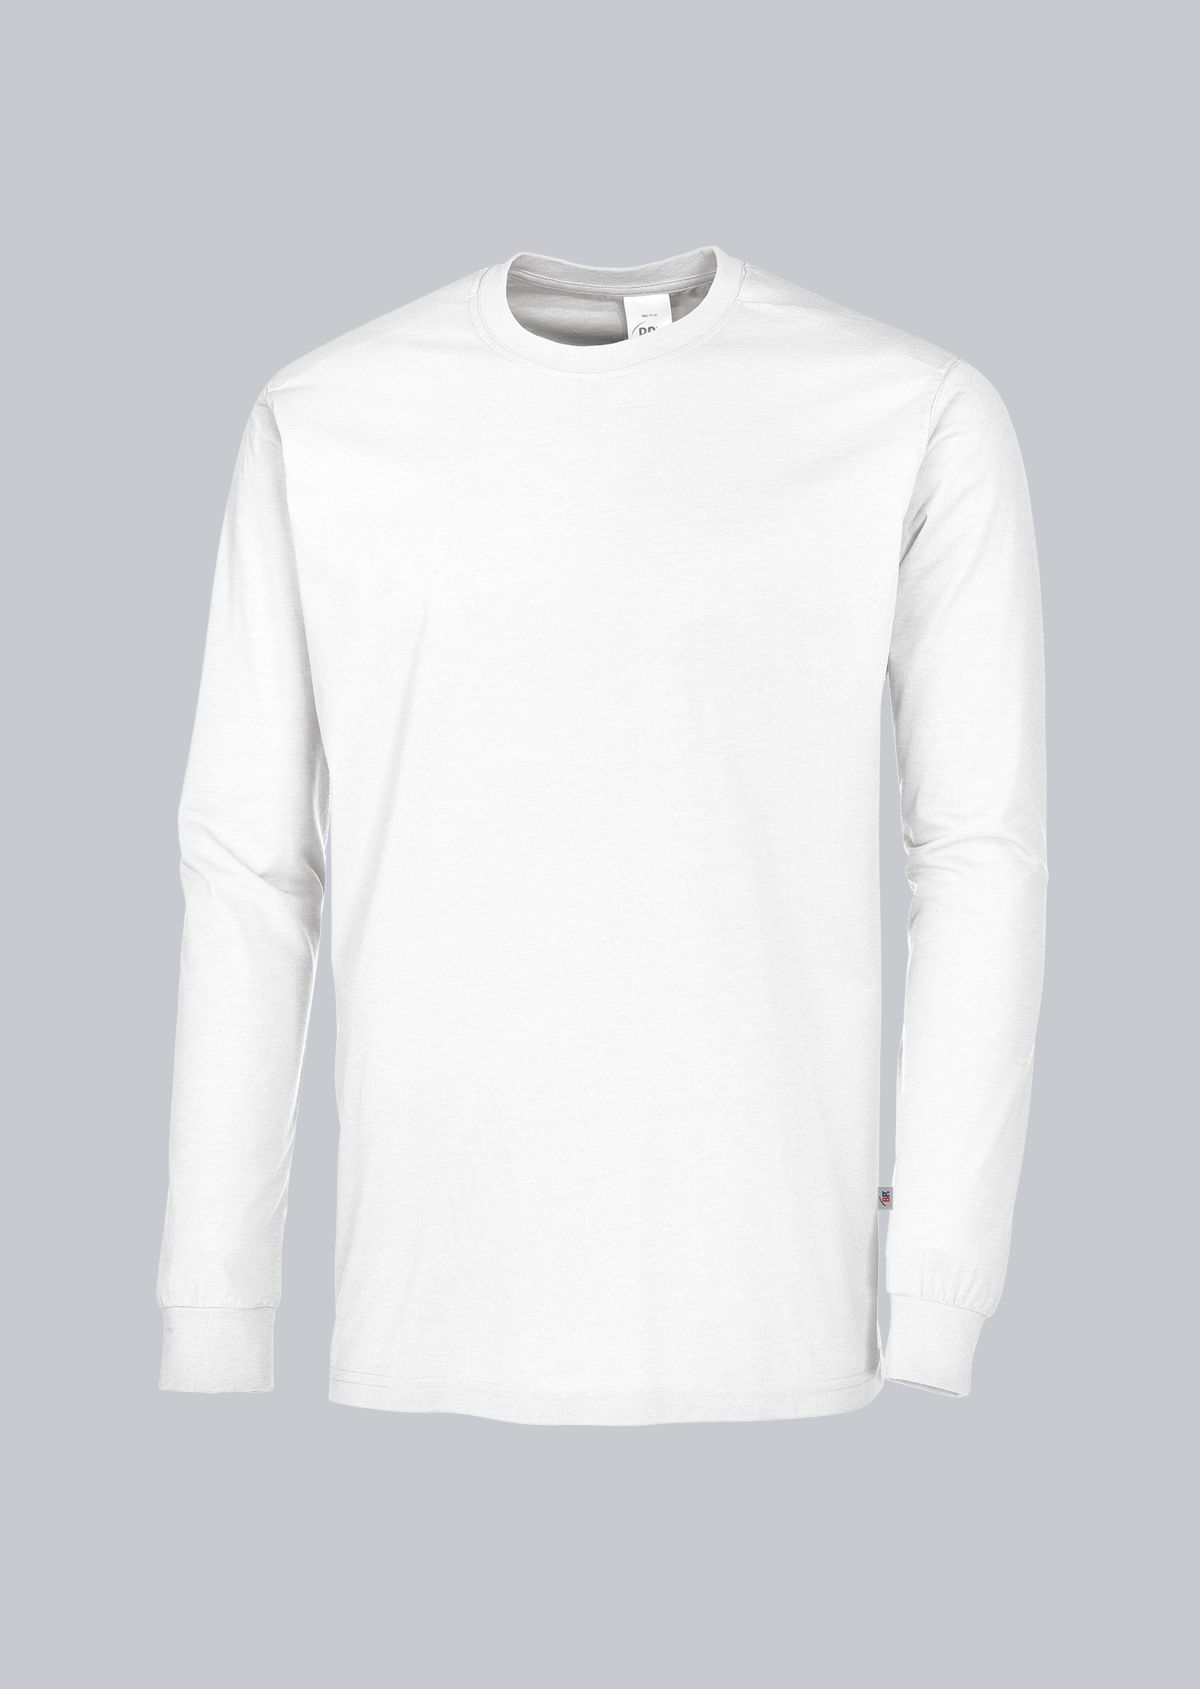 BP® Langarmshirt für Sie & Ihn Shirt Damenlangarmshirt Herrenlangarmshirt Unisex 